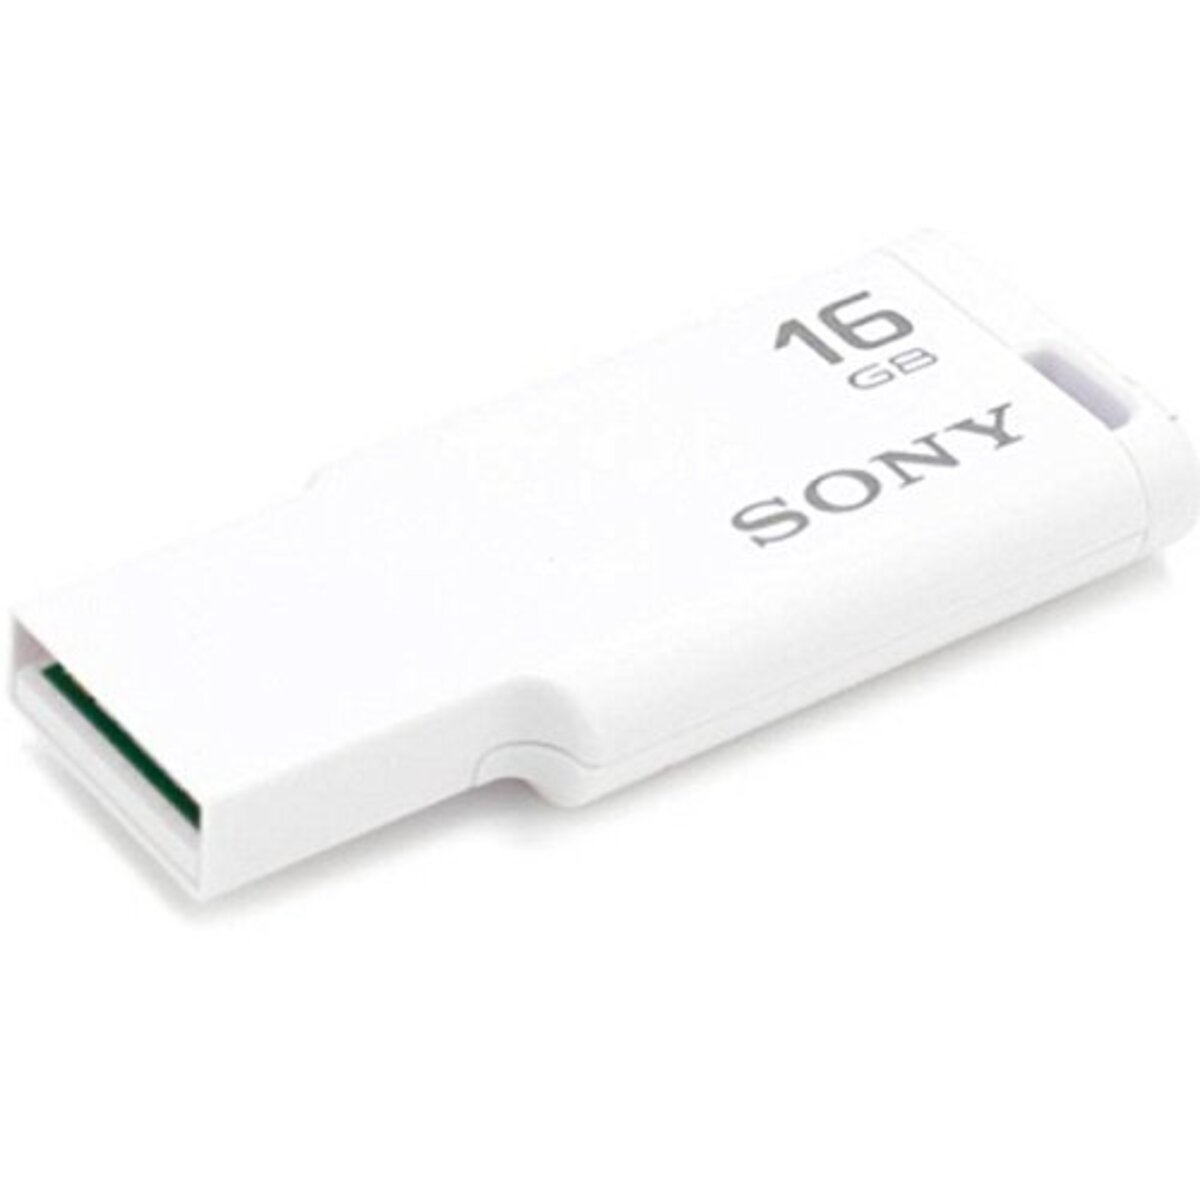 Sony Flash Drive Tiny 16GB White